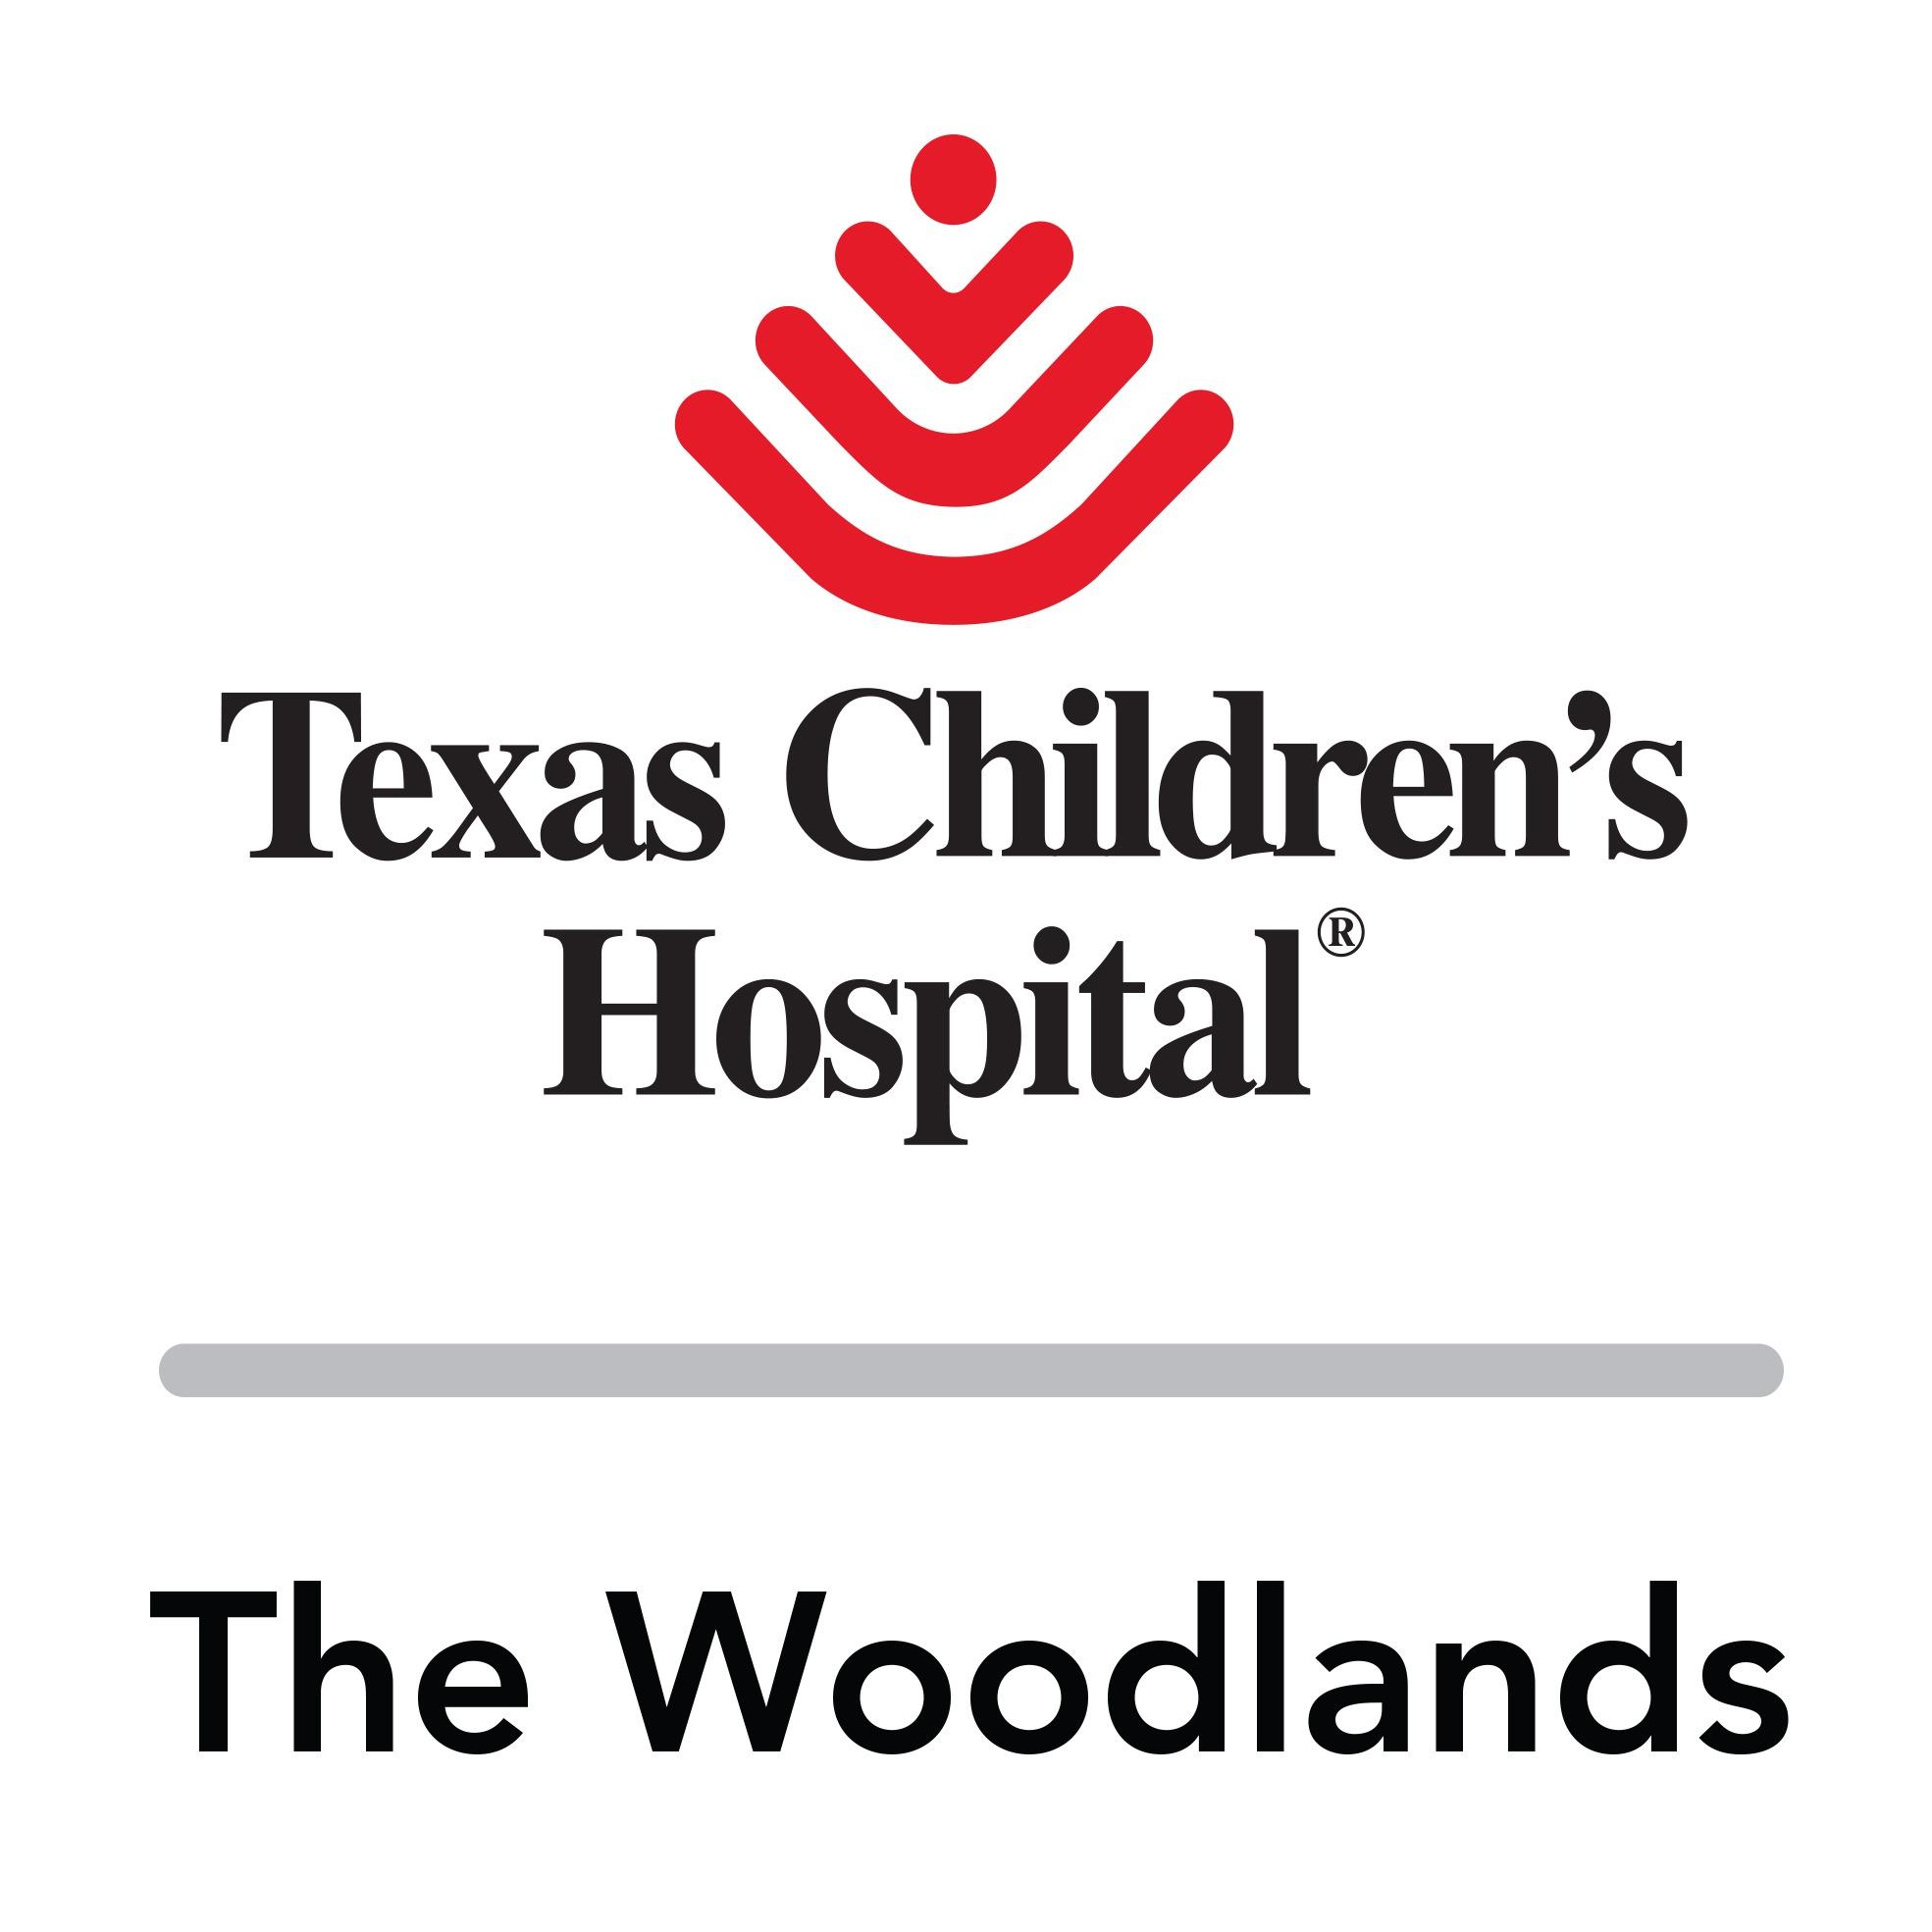 Texas Children's Hospital The Woodlands - Outpatient Services Logo